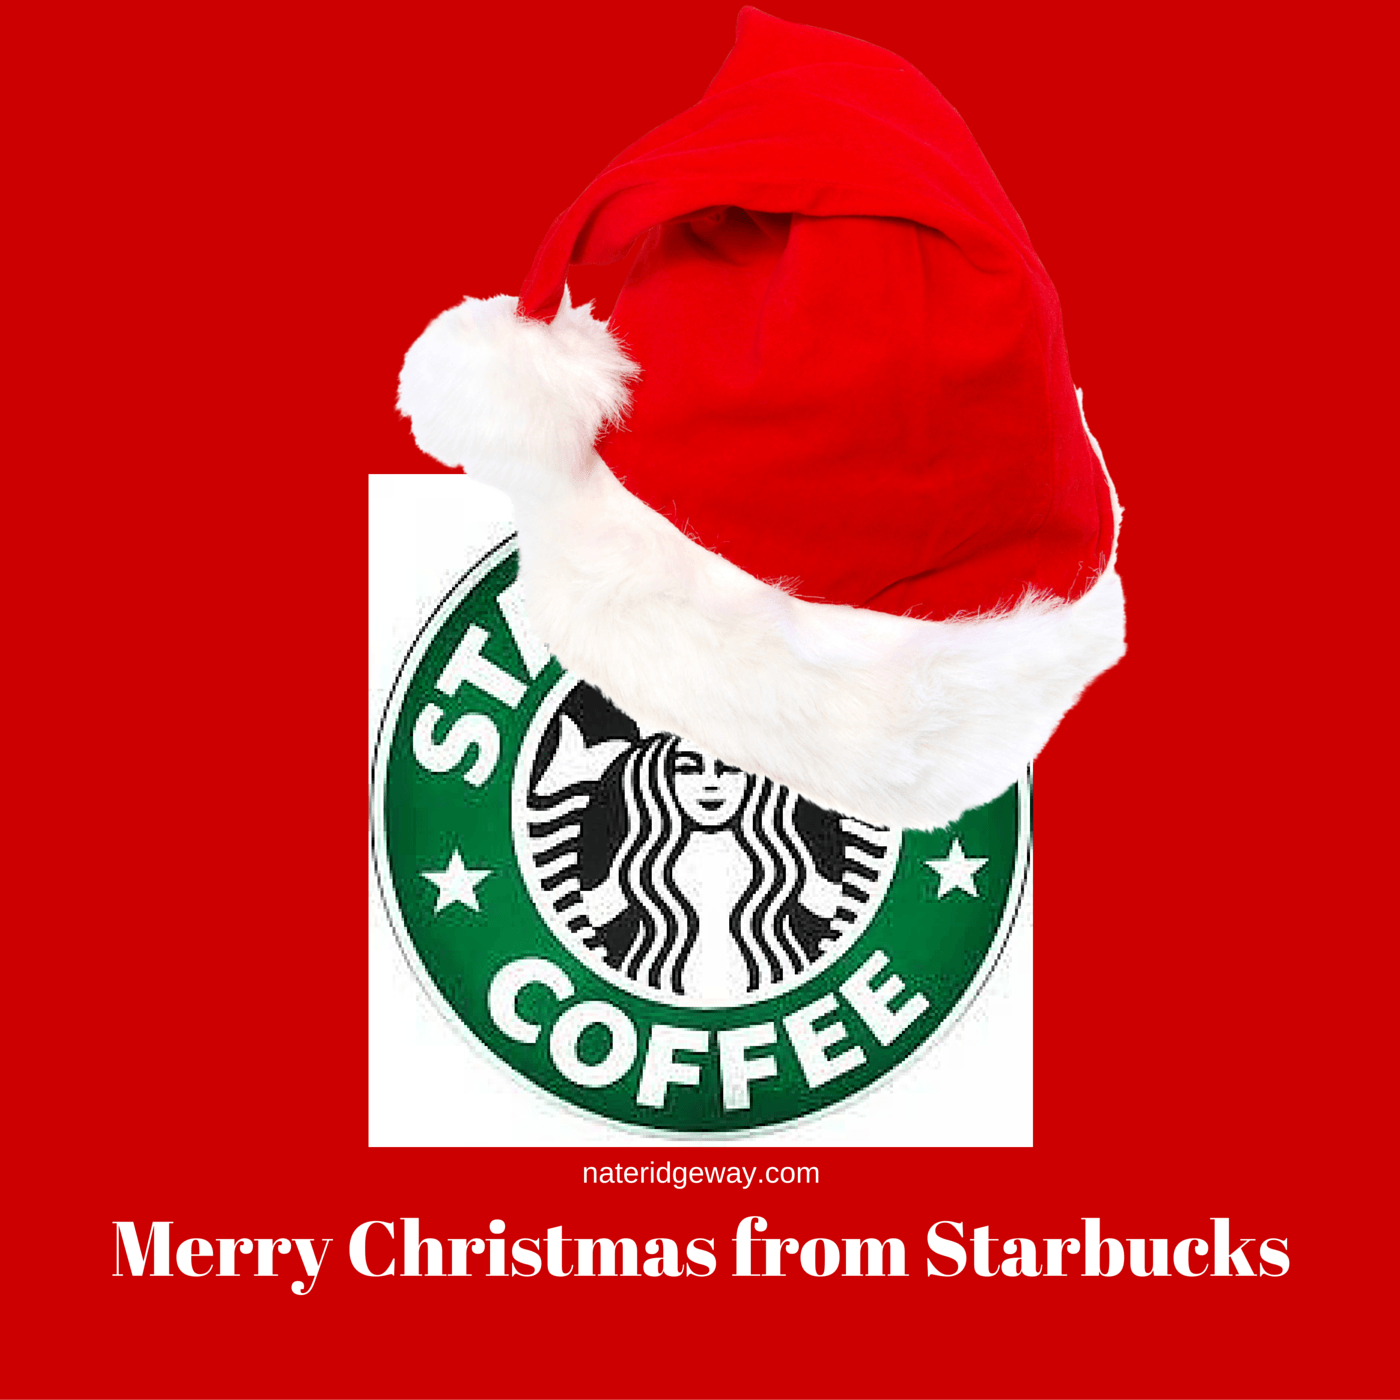 Starbucks Christmas Logo - Starbucks Says Merry Christmas